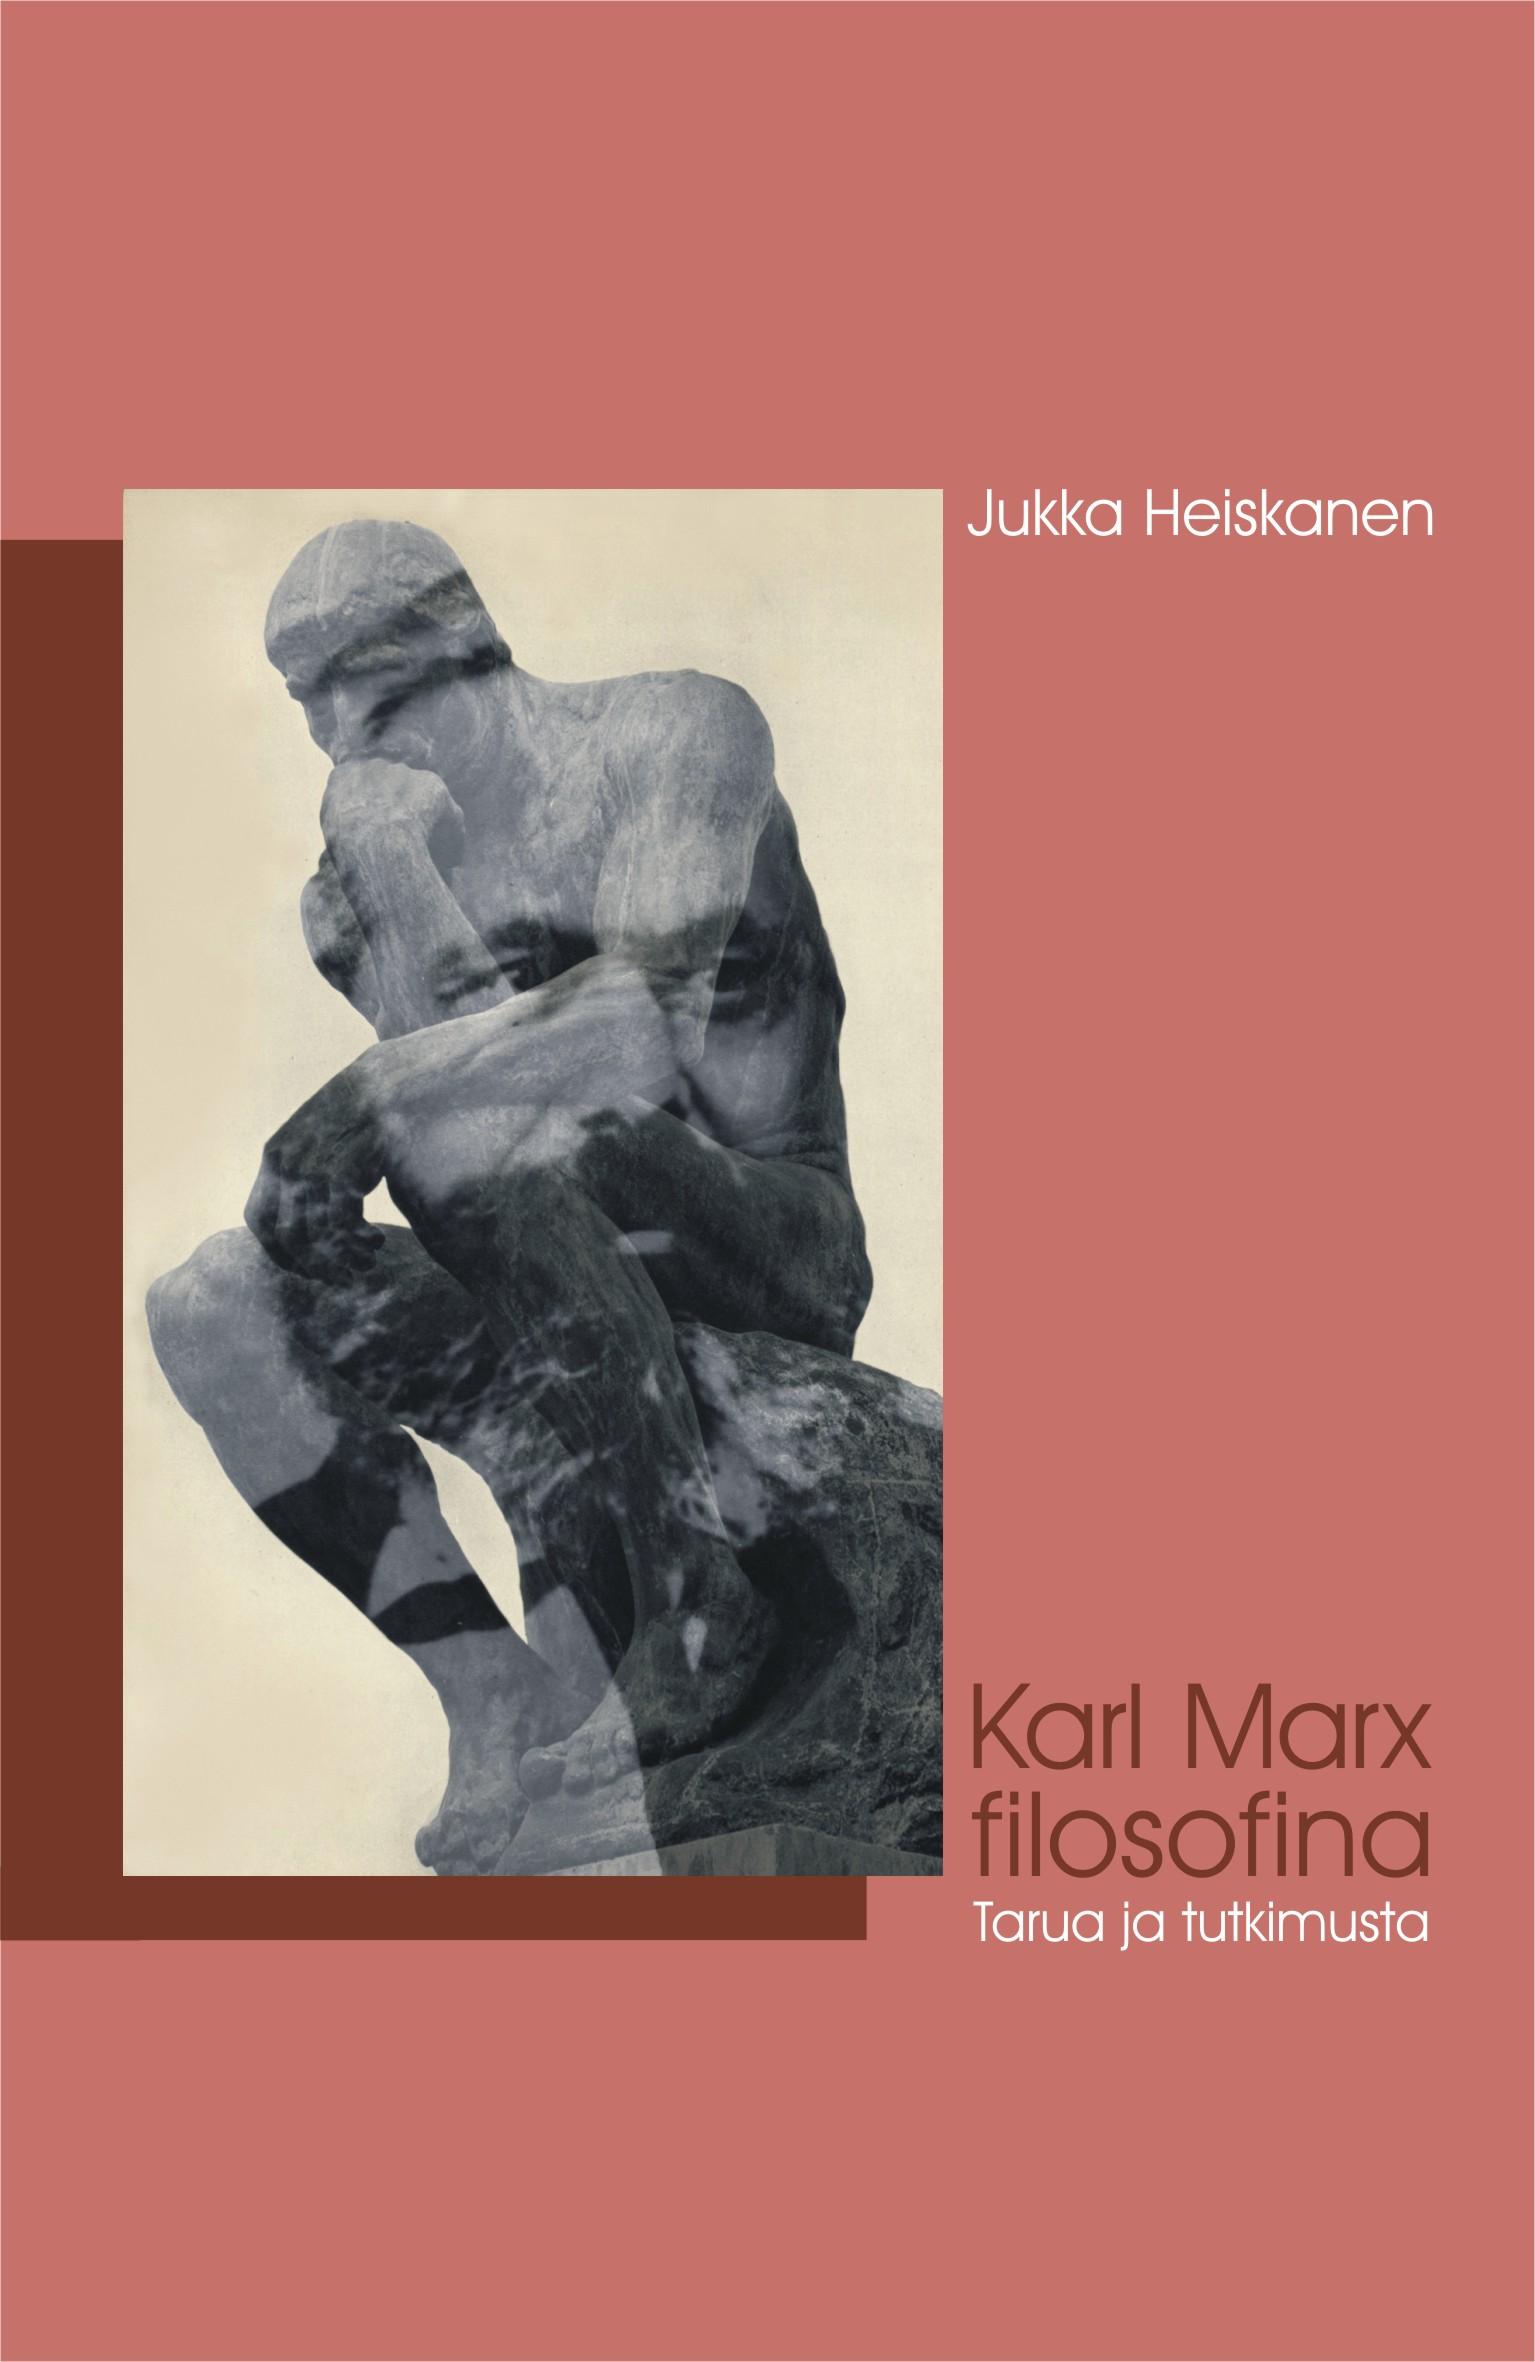 Karl Marx filosofina uudistettu painos